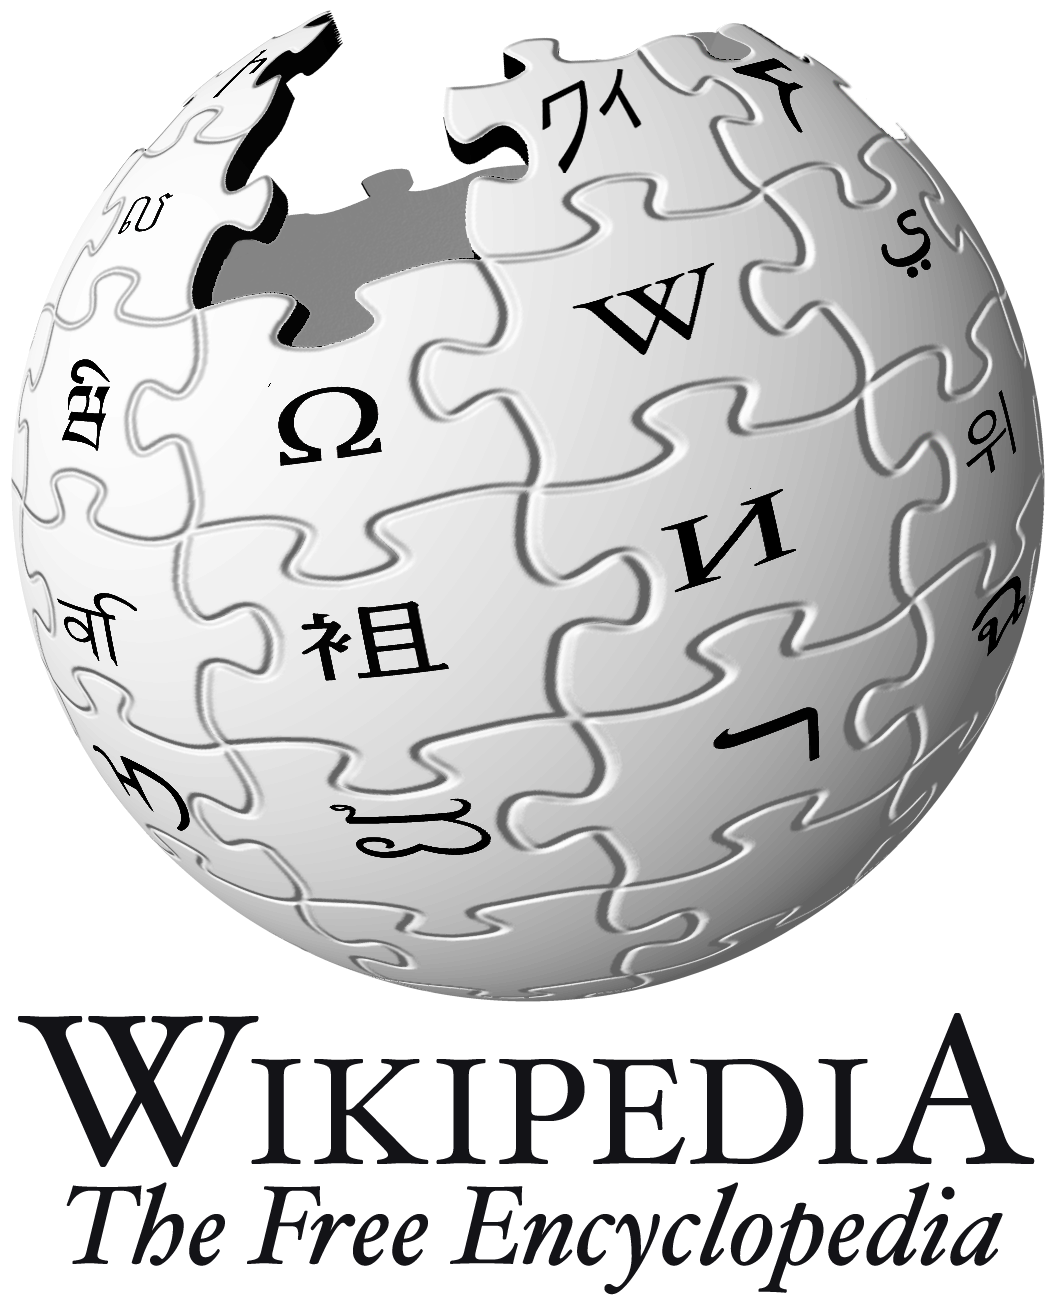 Wikipedia-logo-v2.png